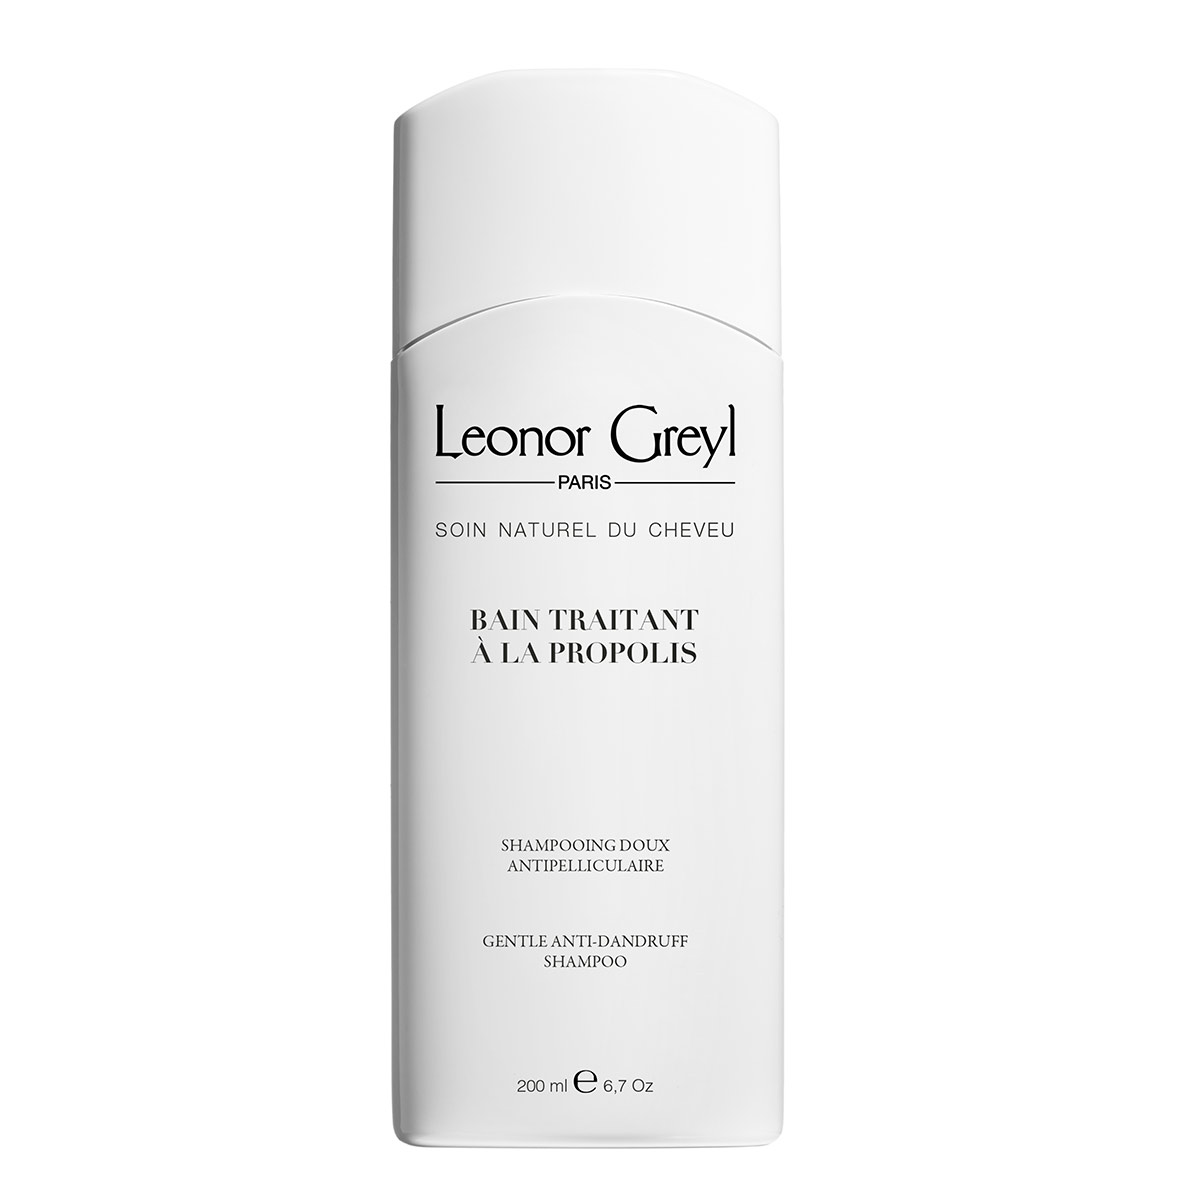 Leonor Greyl Paris Bain Traitant a La Propolis Gentle Anti-Dandruff Shampoo